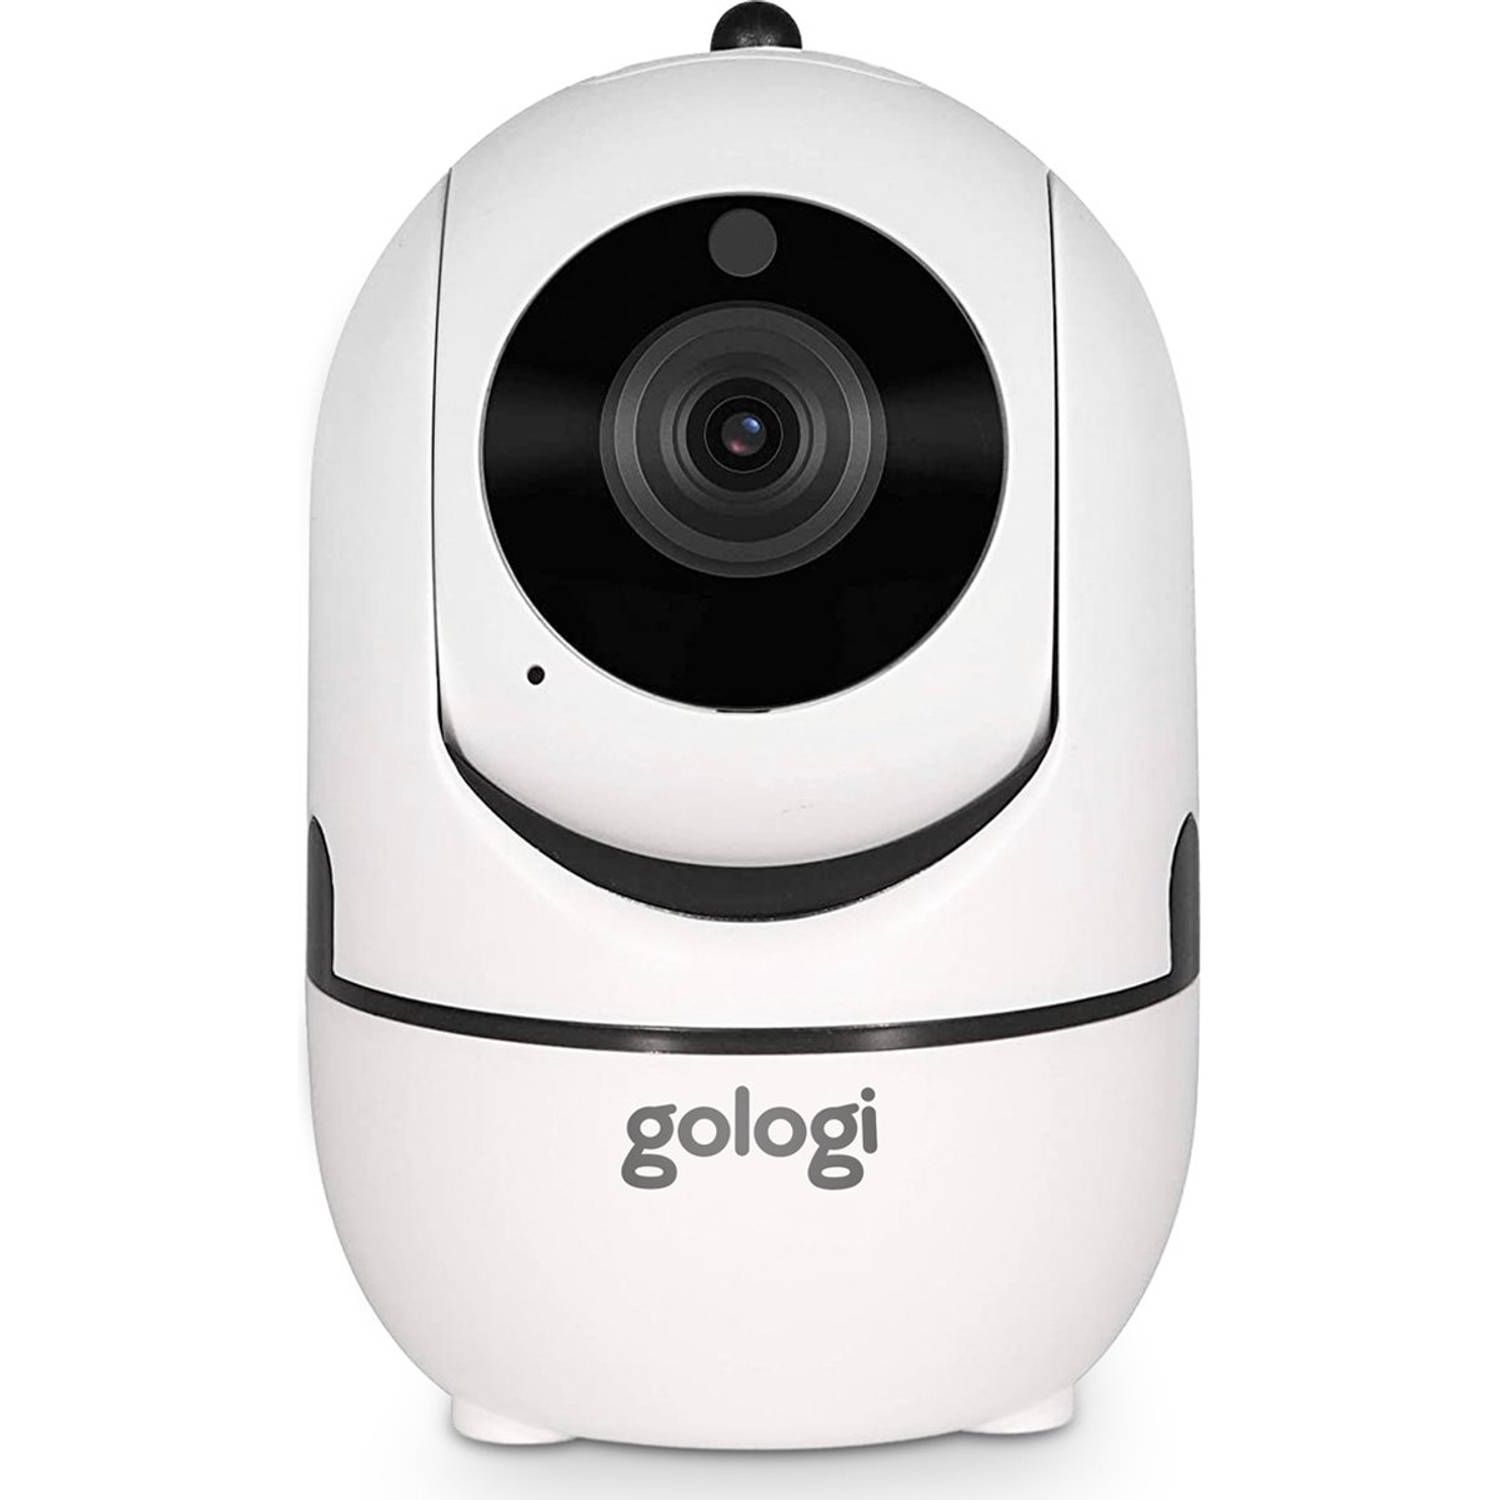 Gologi huisdiercamera Hondencamera -Beveiligingscamera Security camera Voor alle huisdieren Met wifi